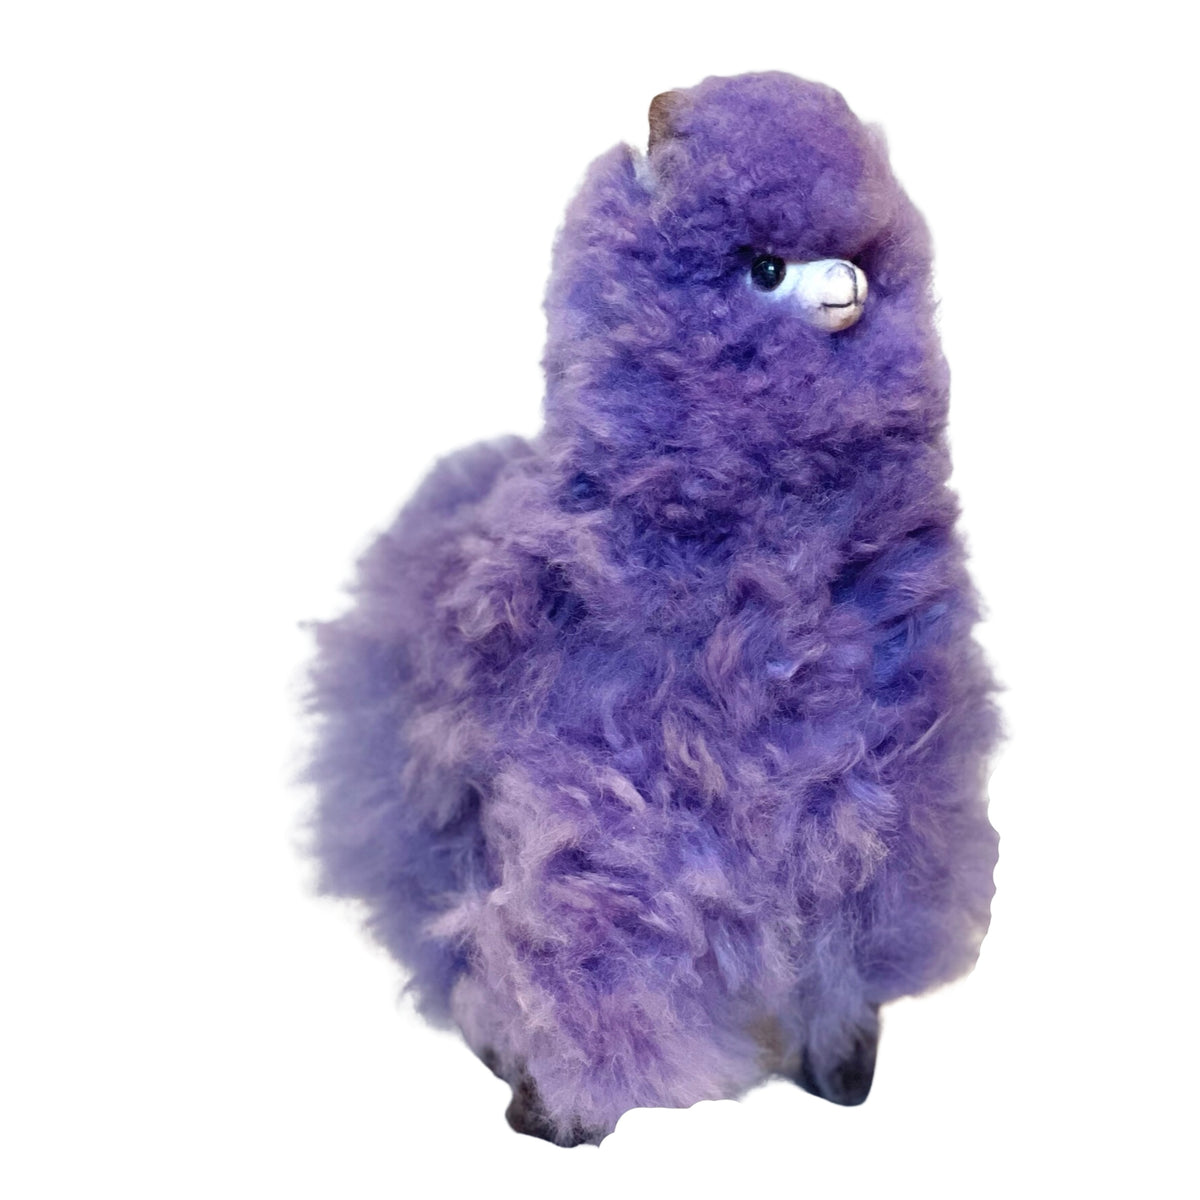 Product photo of a soft fluffy cute adorable purple violet plush alpaca wool figurine plushie.